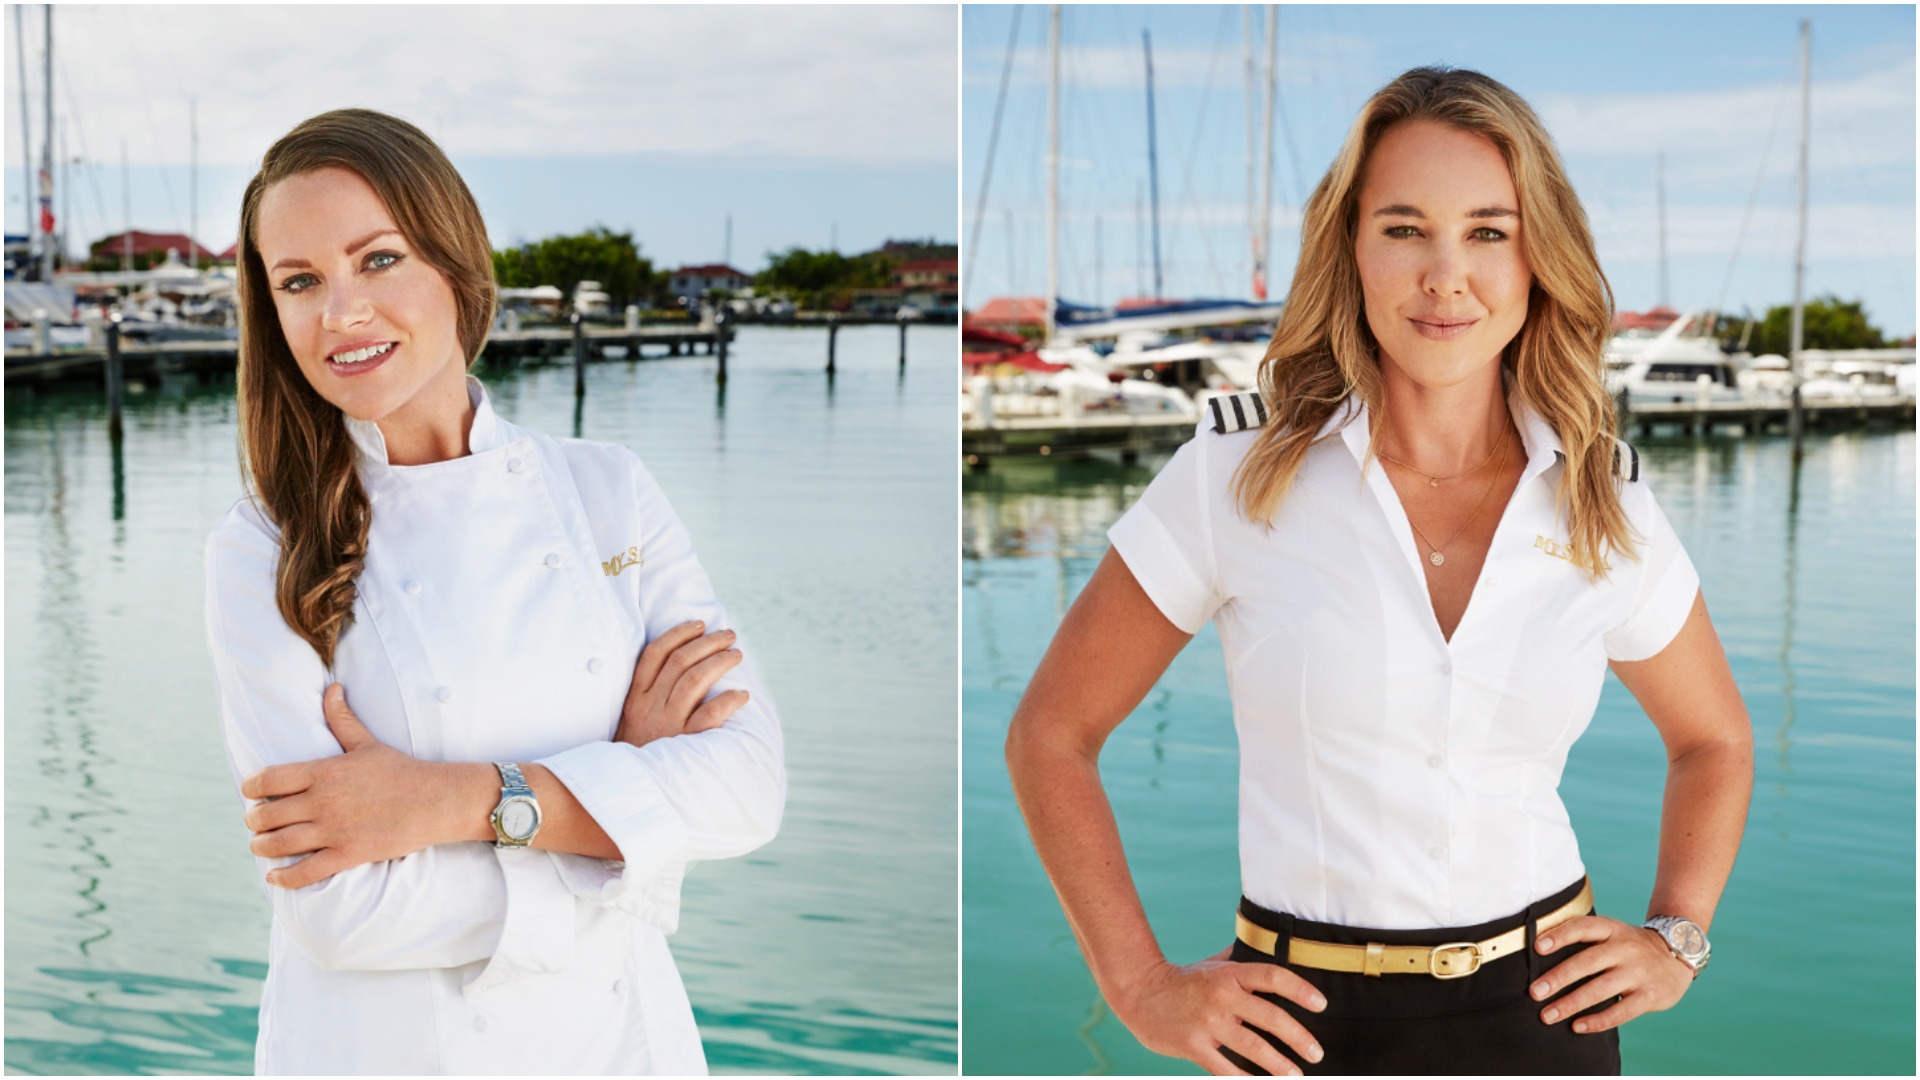 Chef Rachel Hargrove and Francesca Rubi Below Deck cast photos